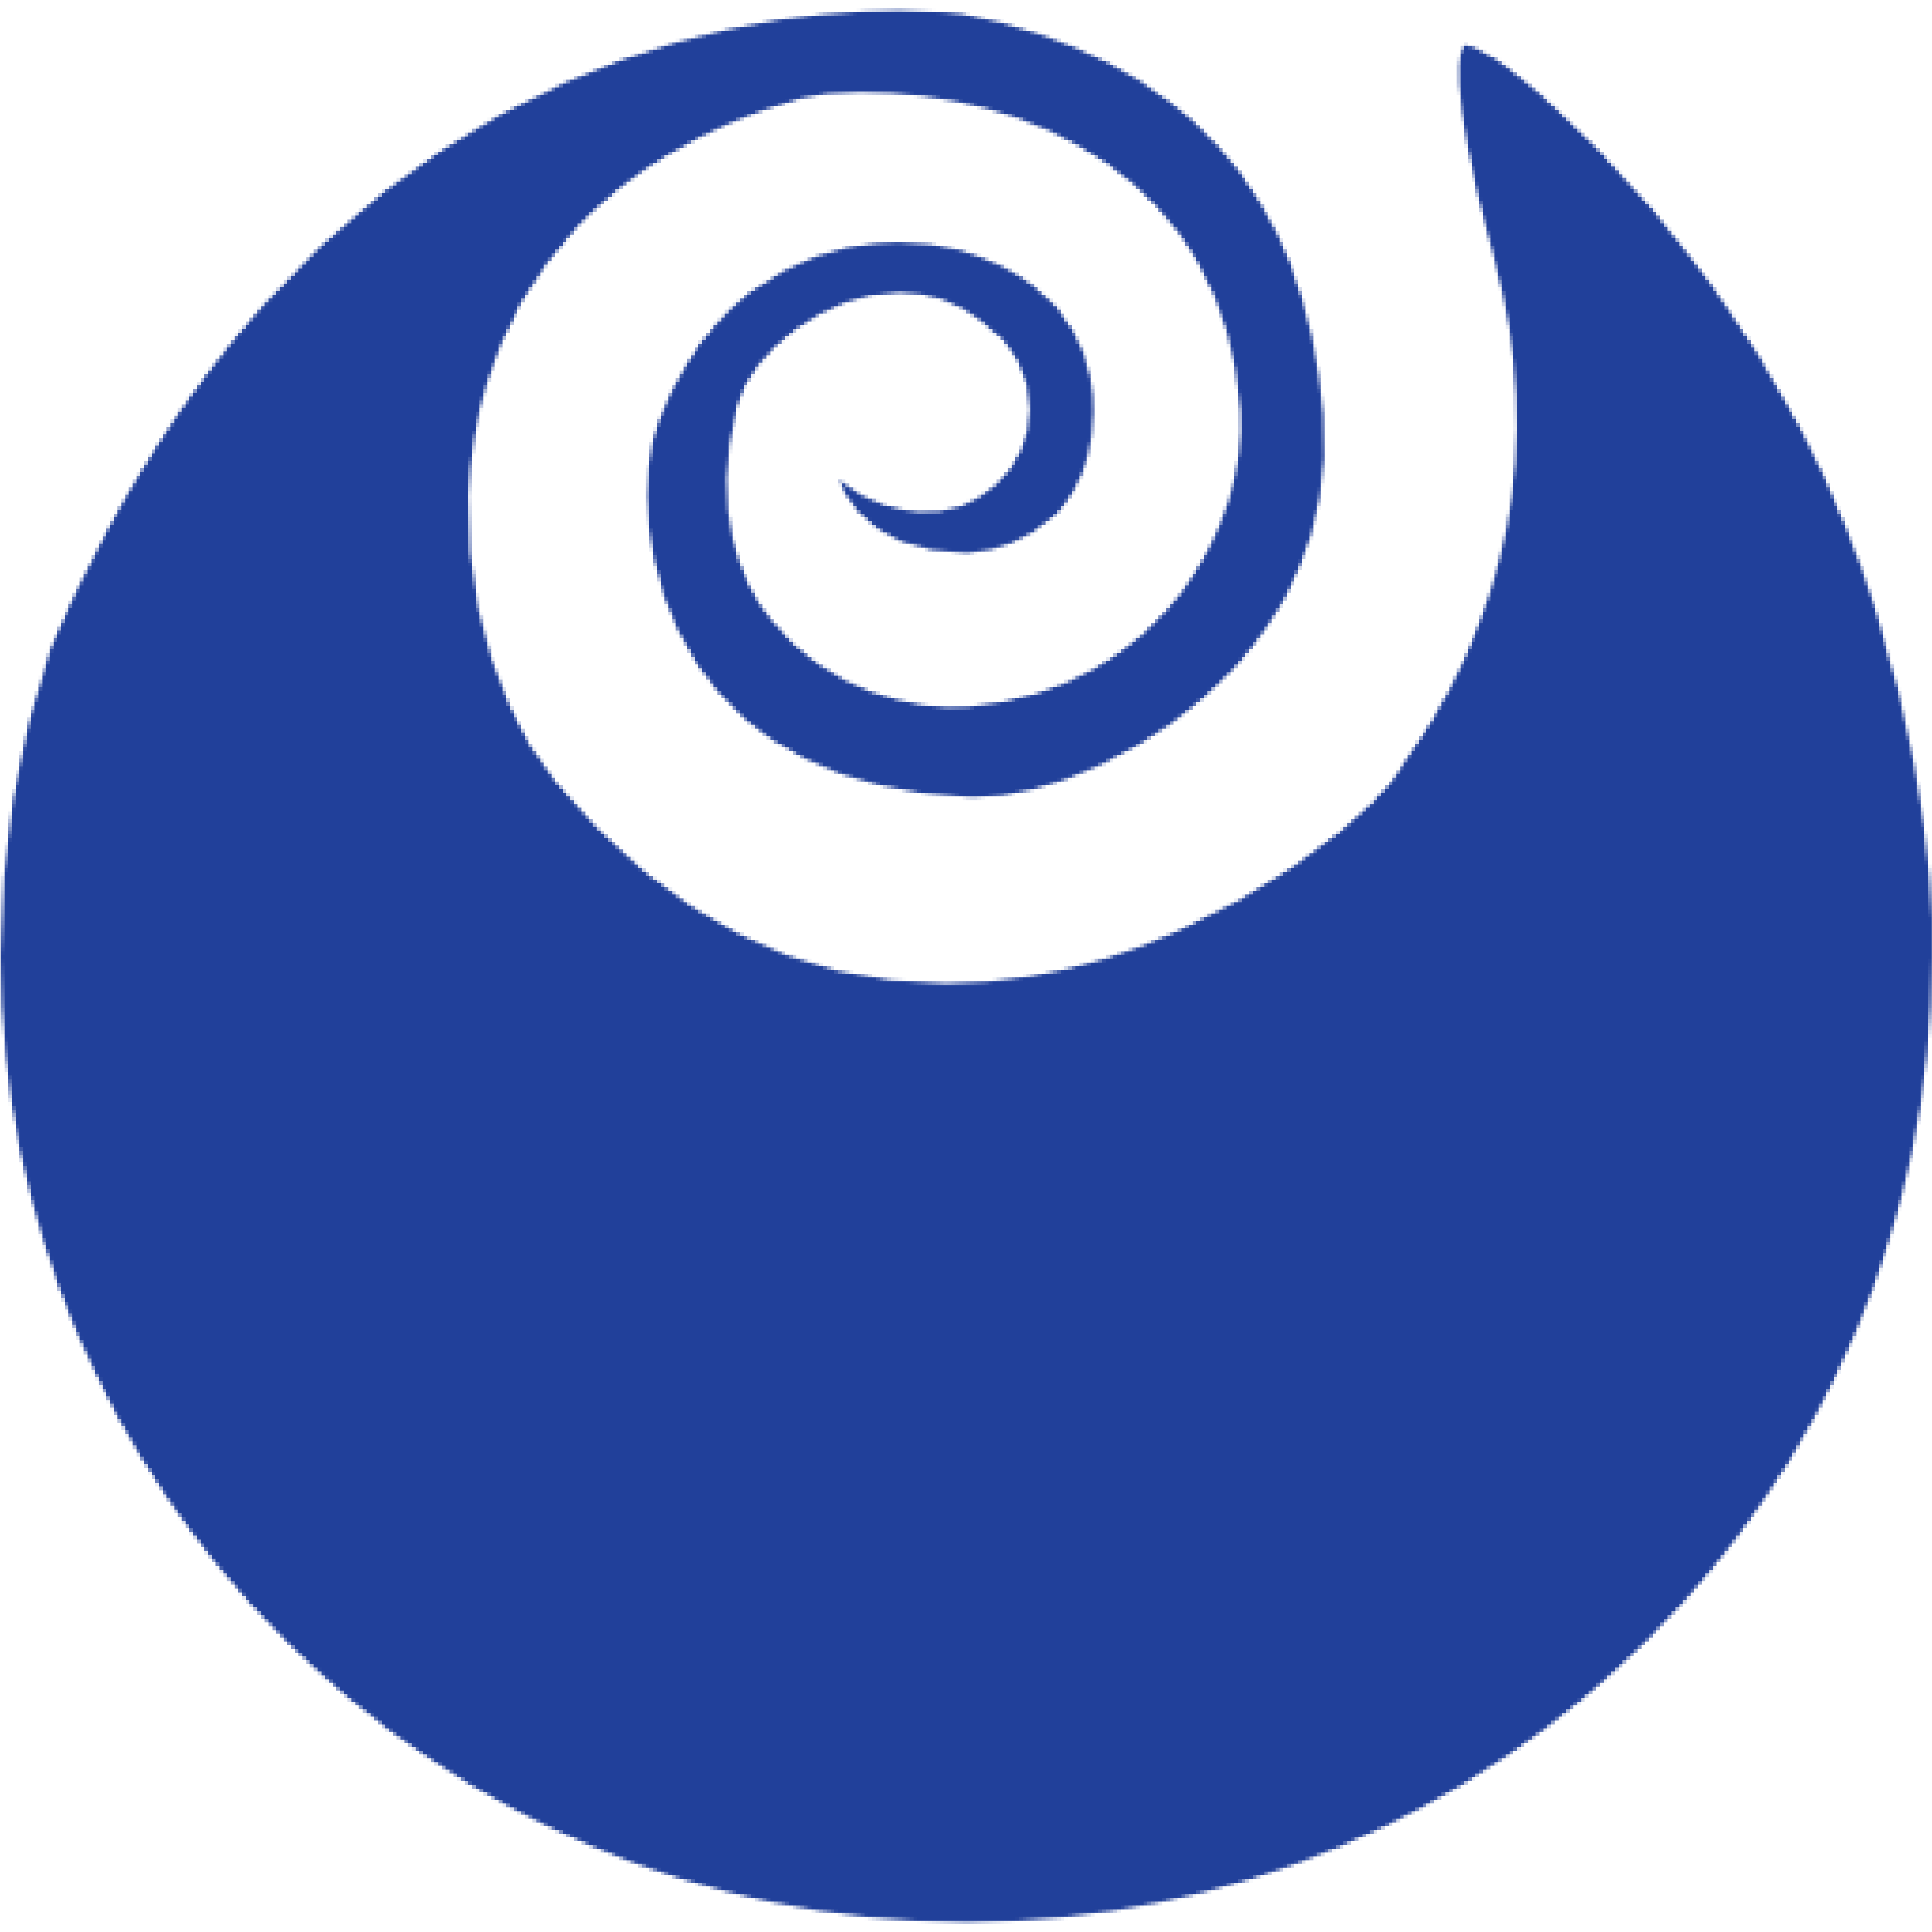 Swirl Icon